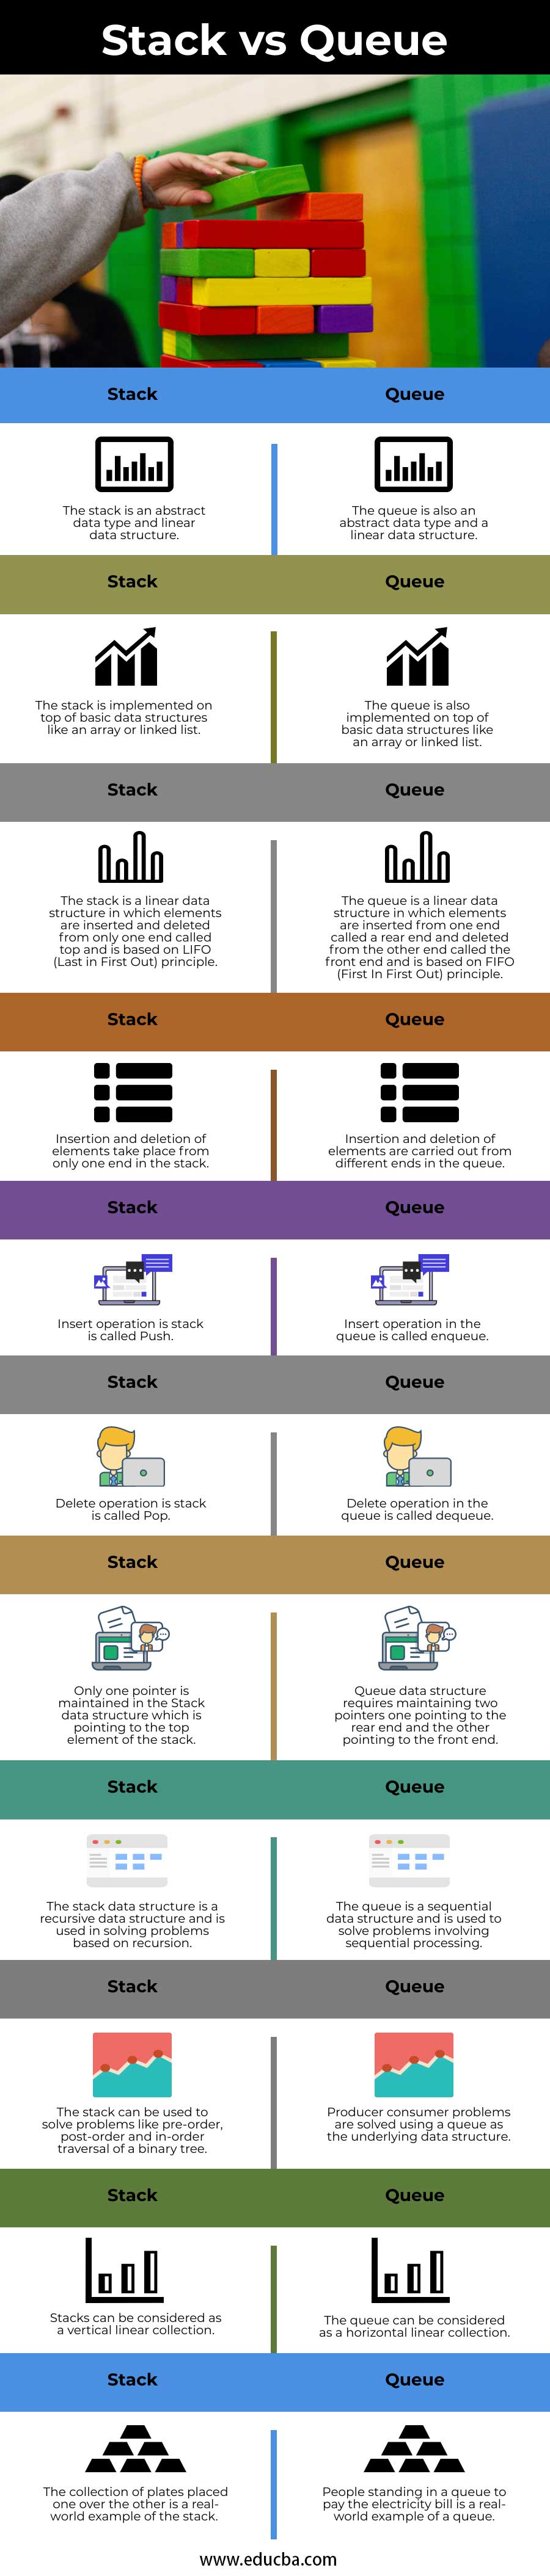 Stack-vs-Queue-info